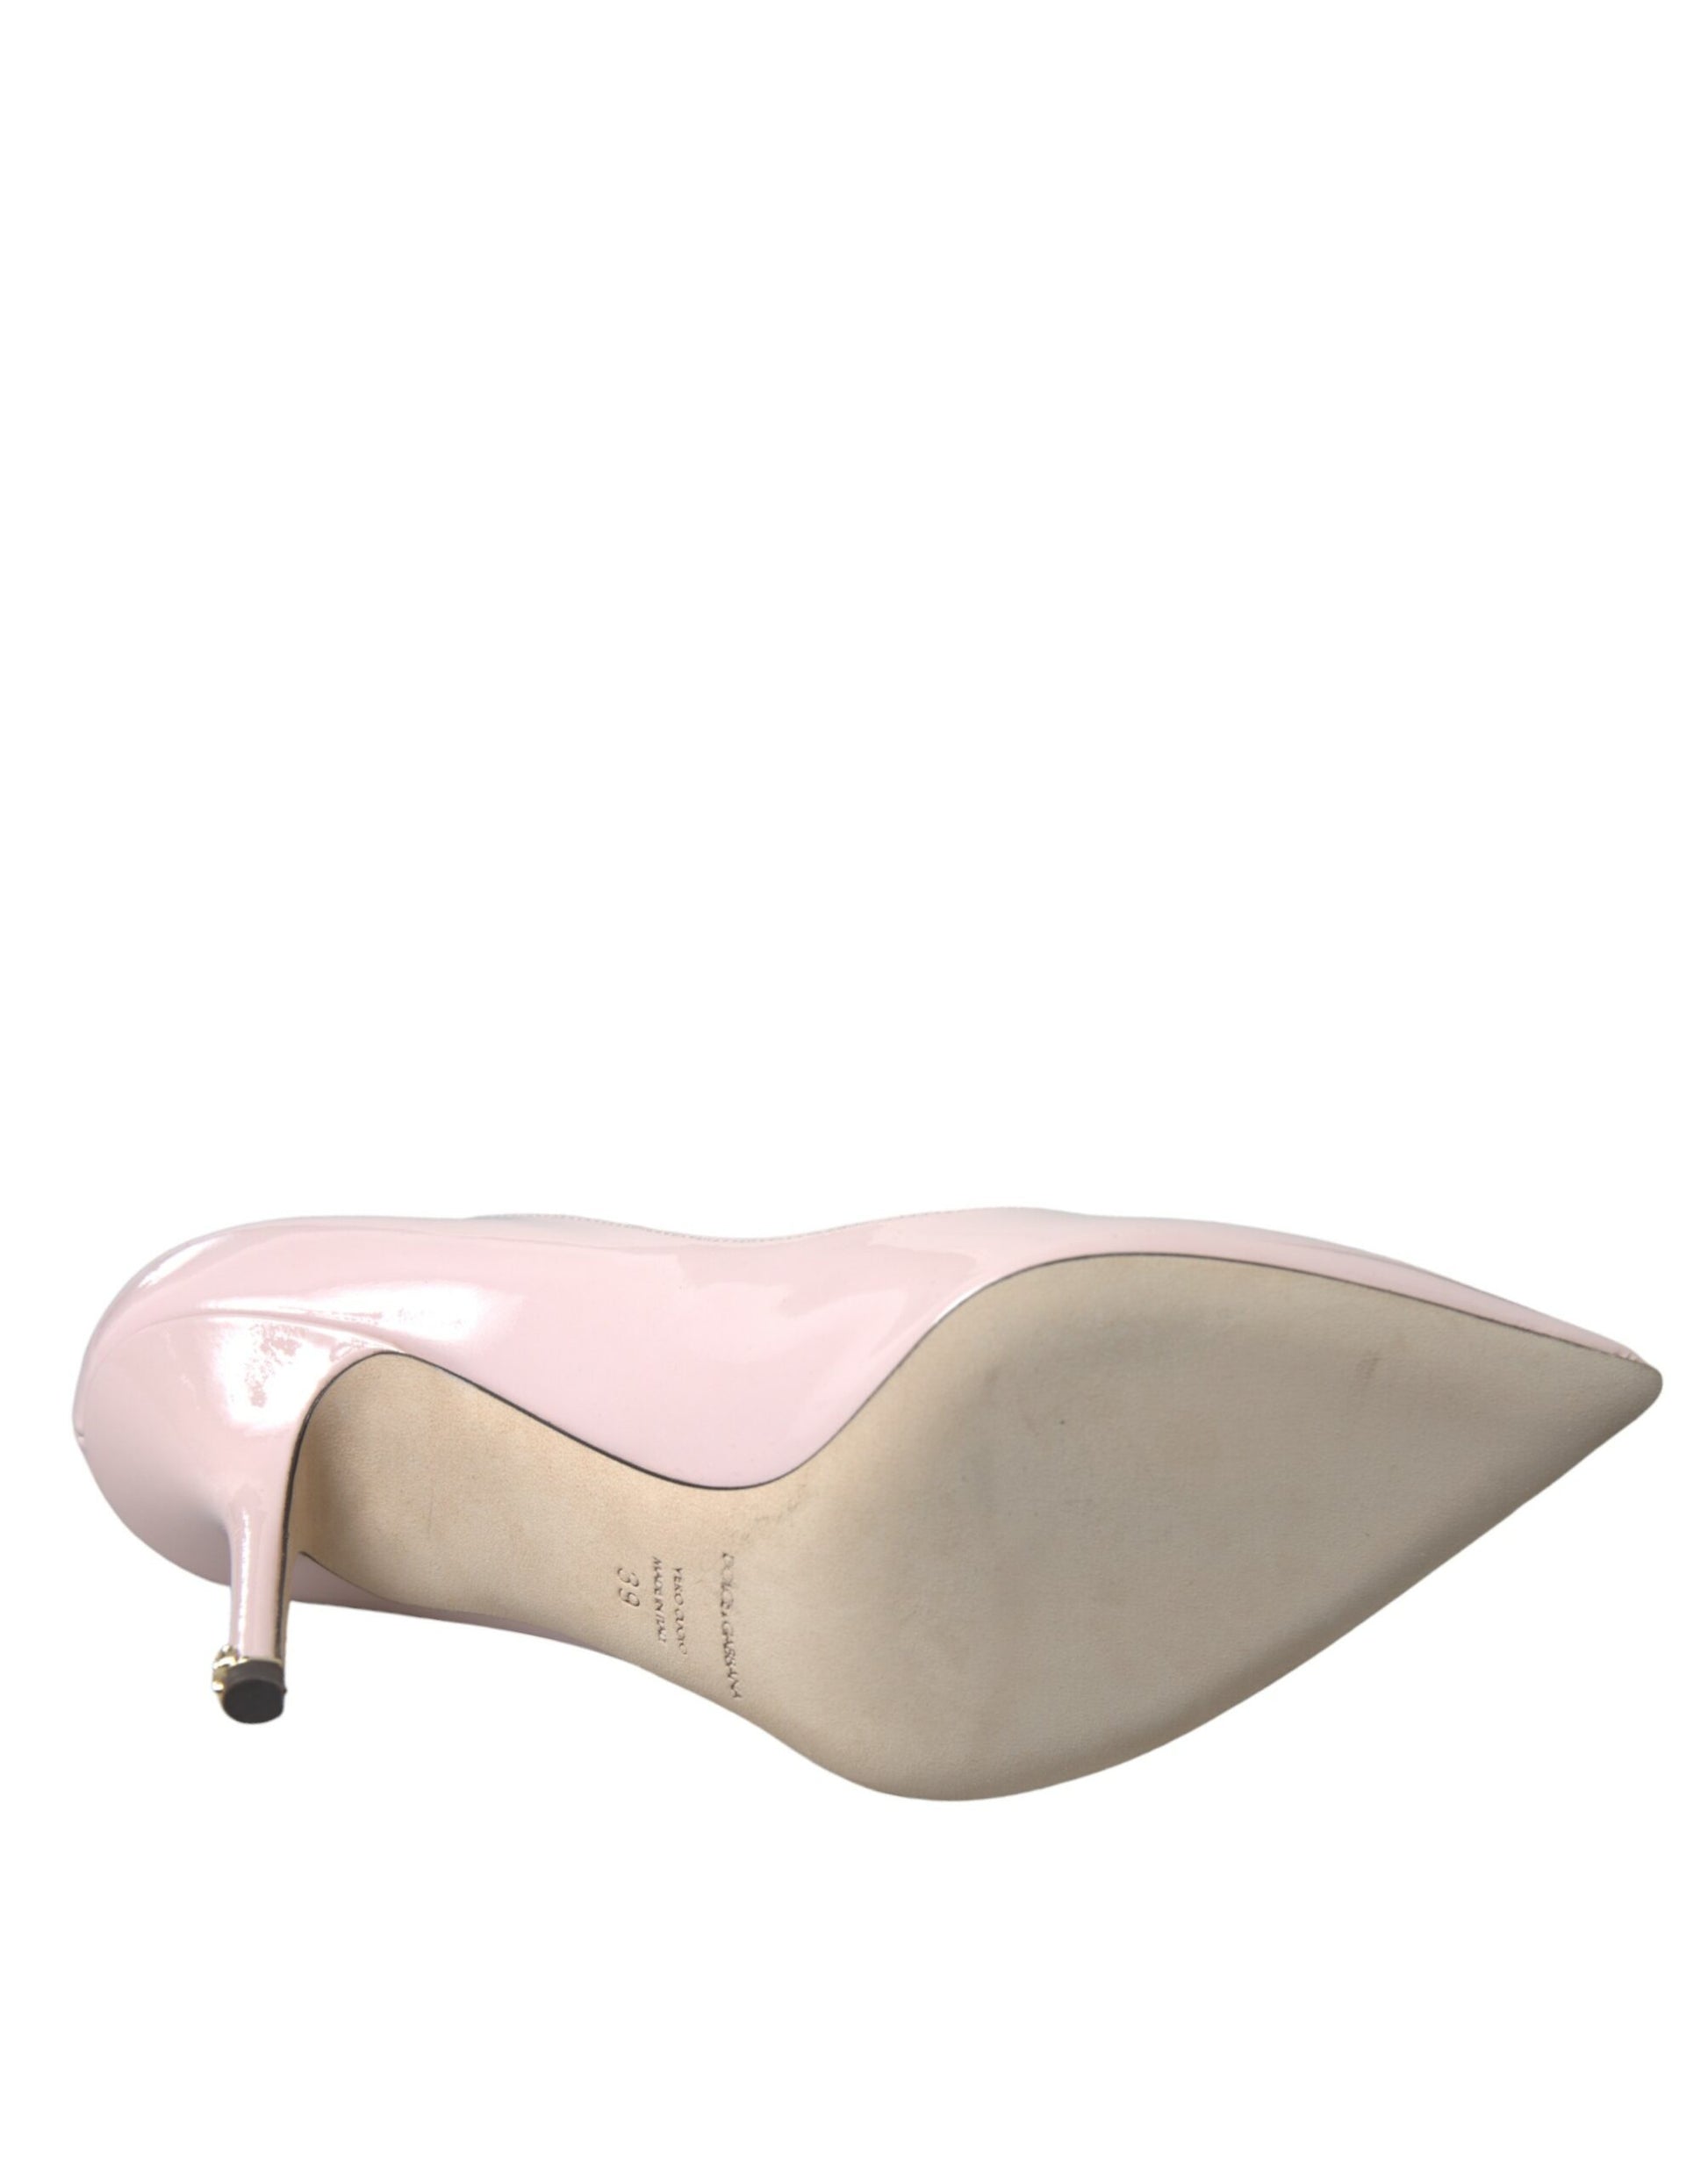 Light Pink Leather Bellucci Heels Pumps Shoes